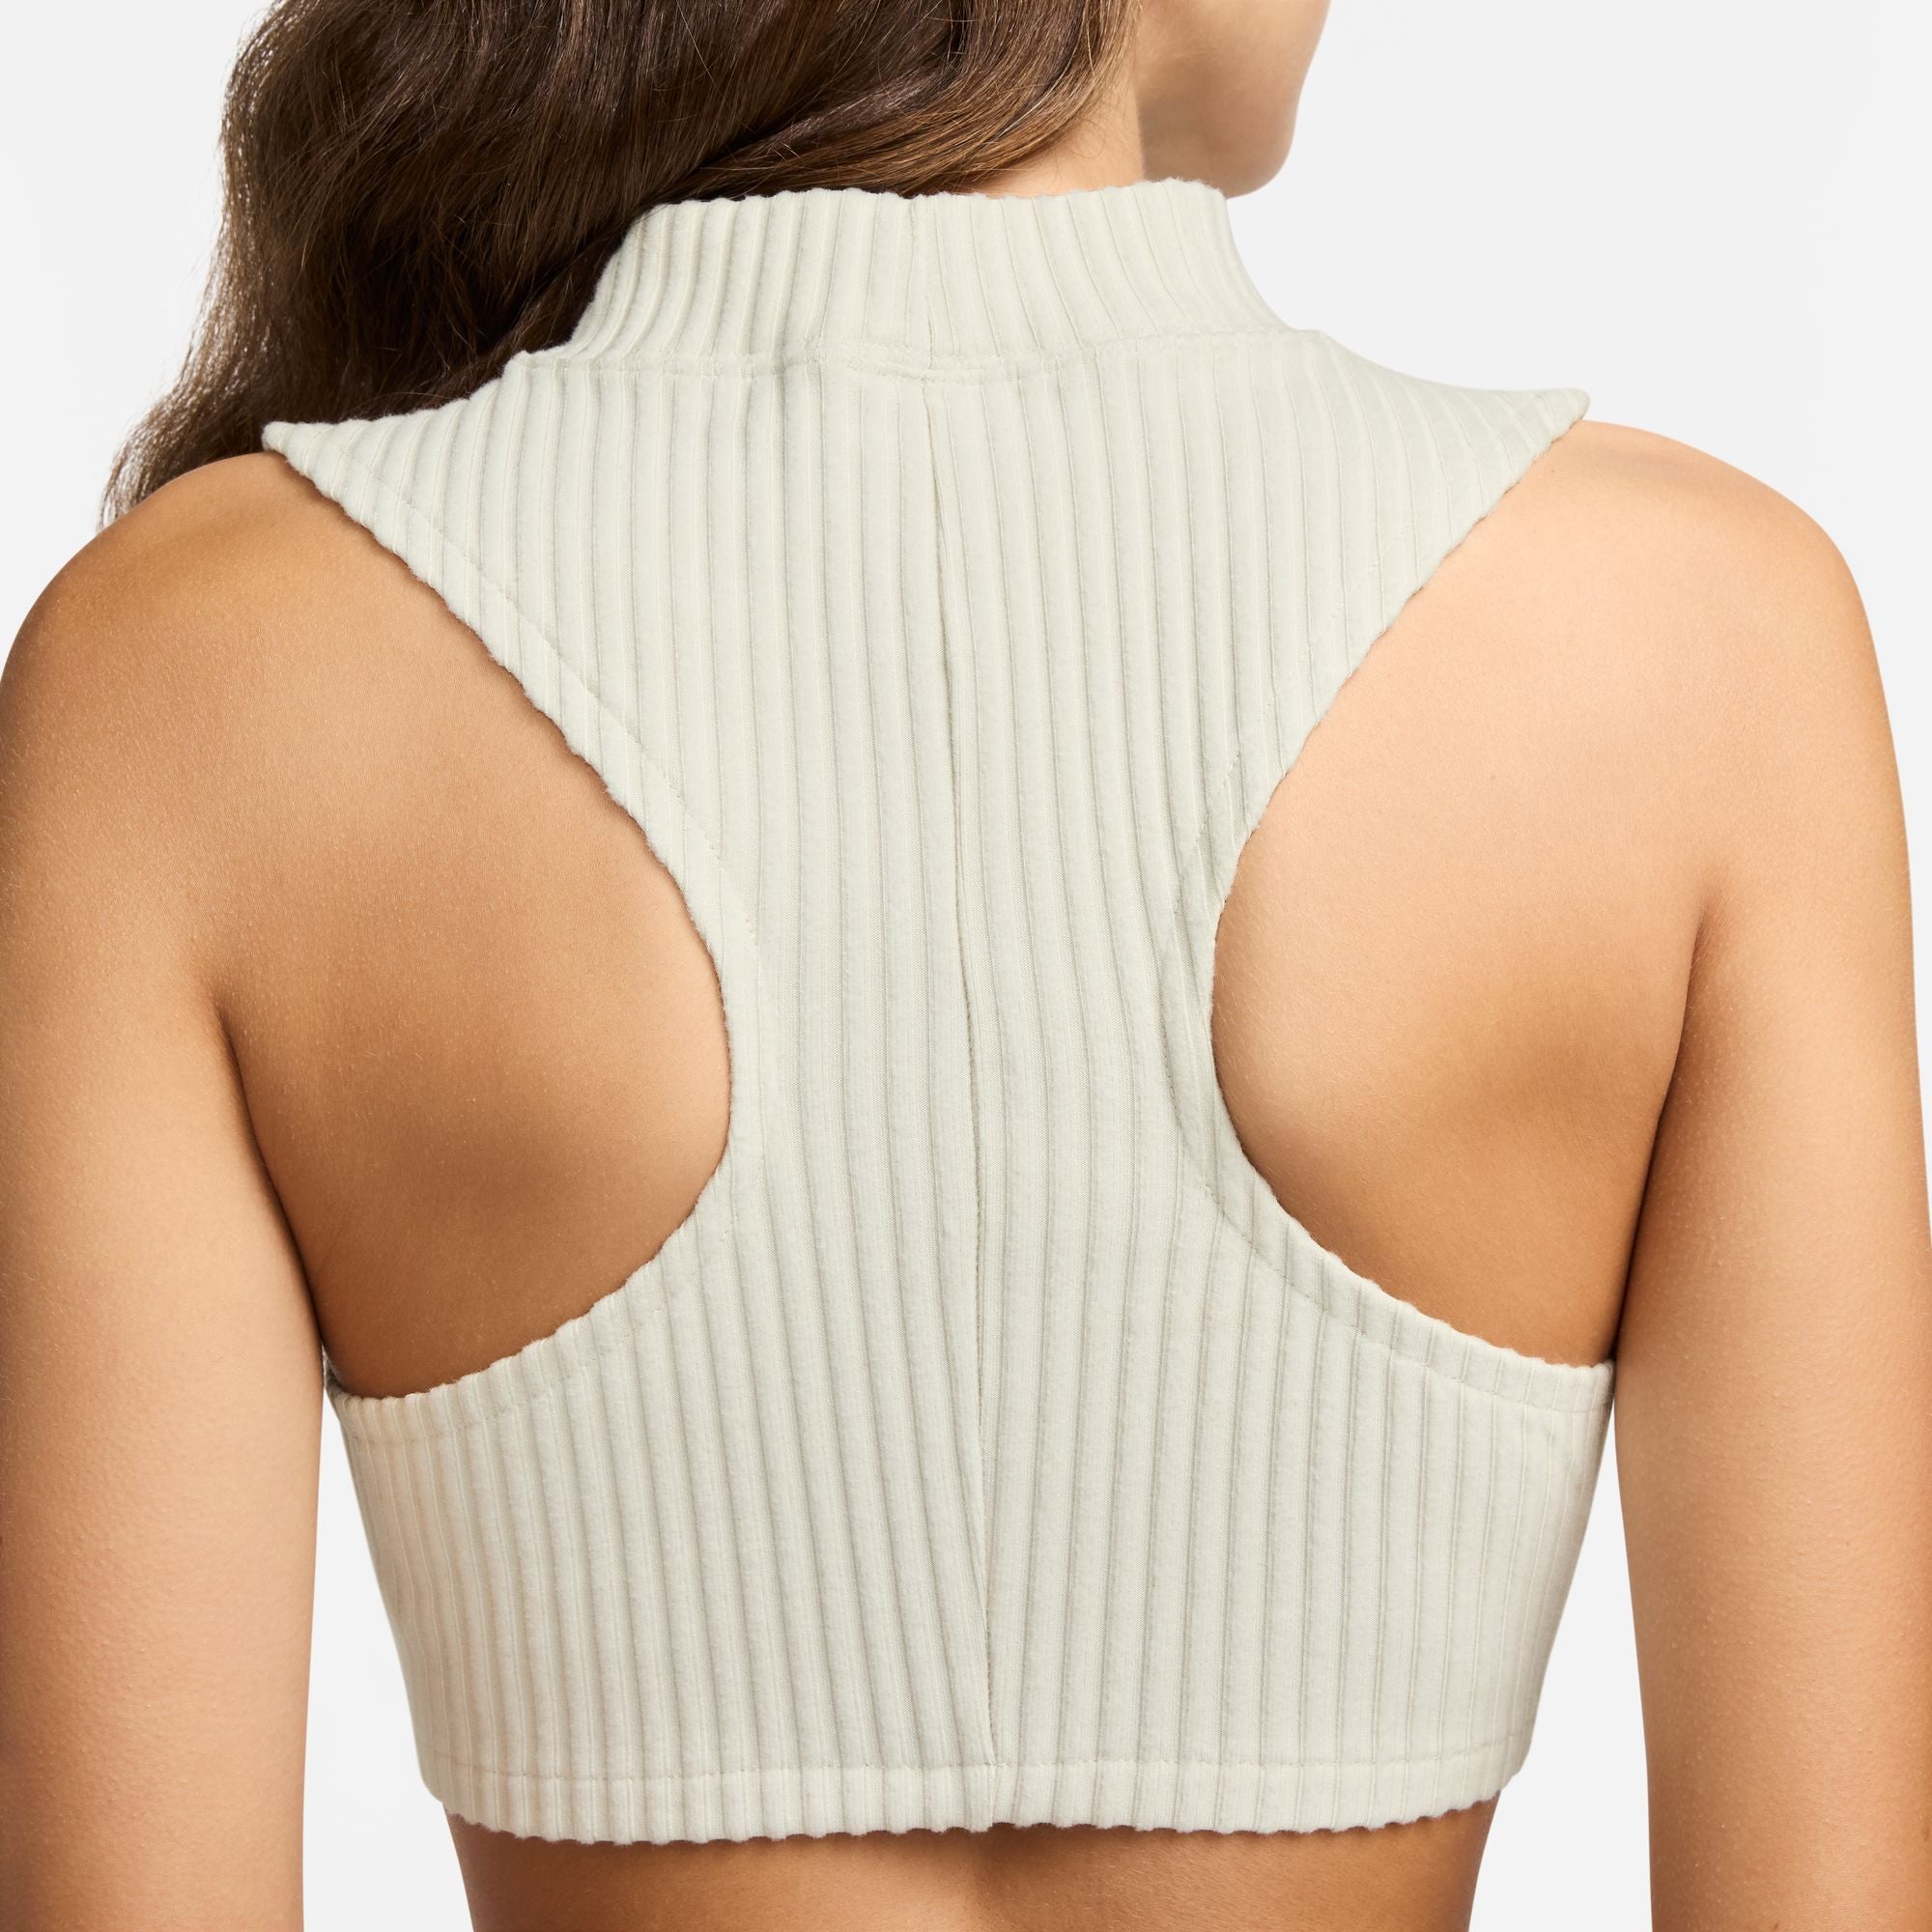 Nike Sportswear Chill Knit Women's Tight Mock-Neck Ribbed Cropped Tank Top